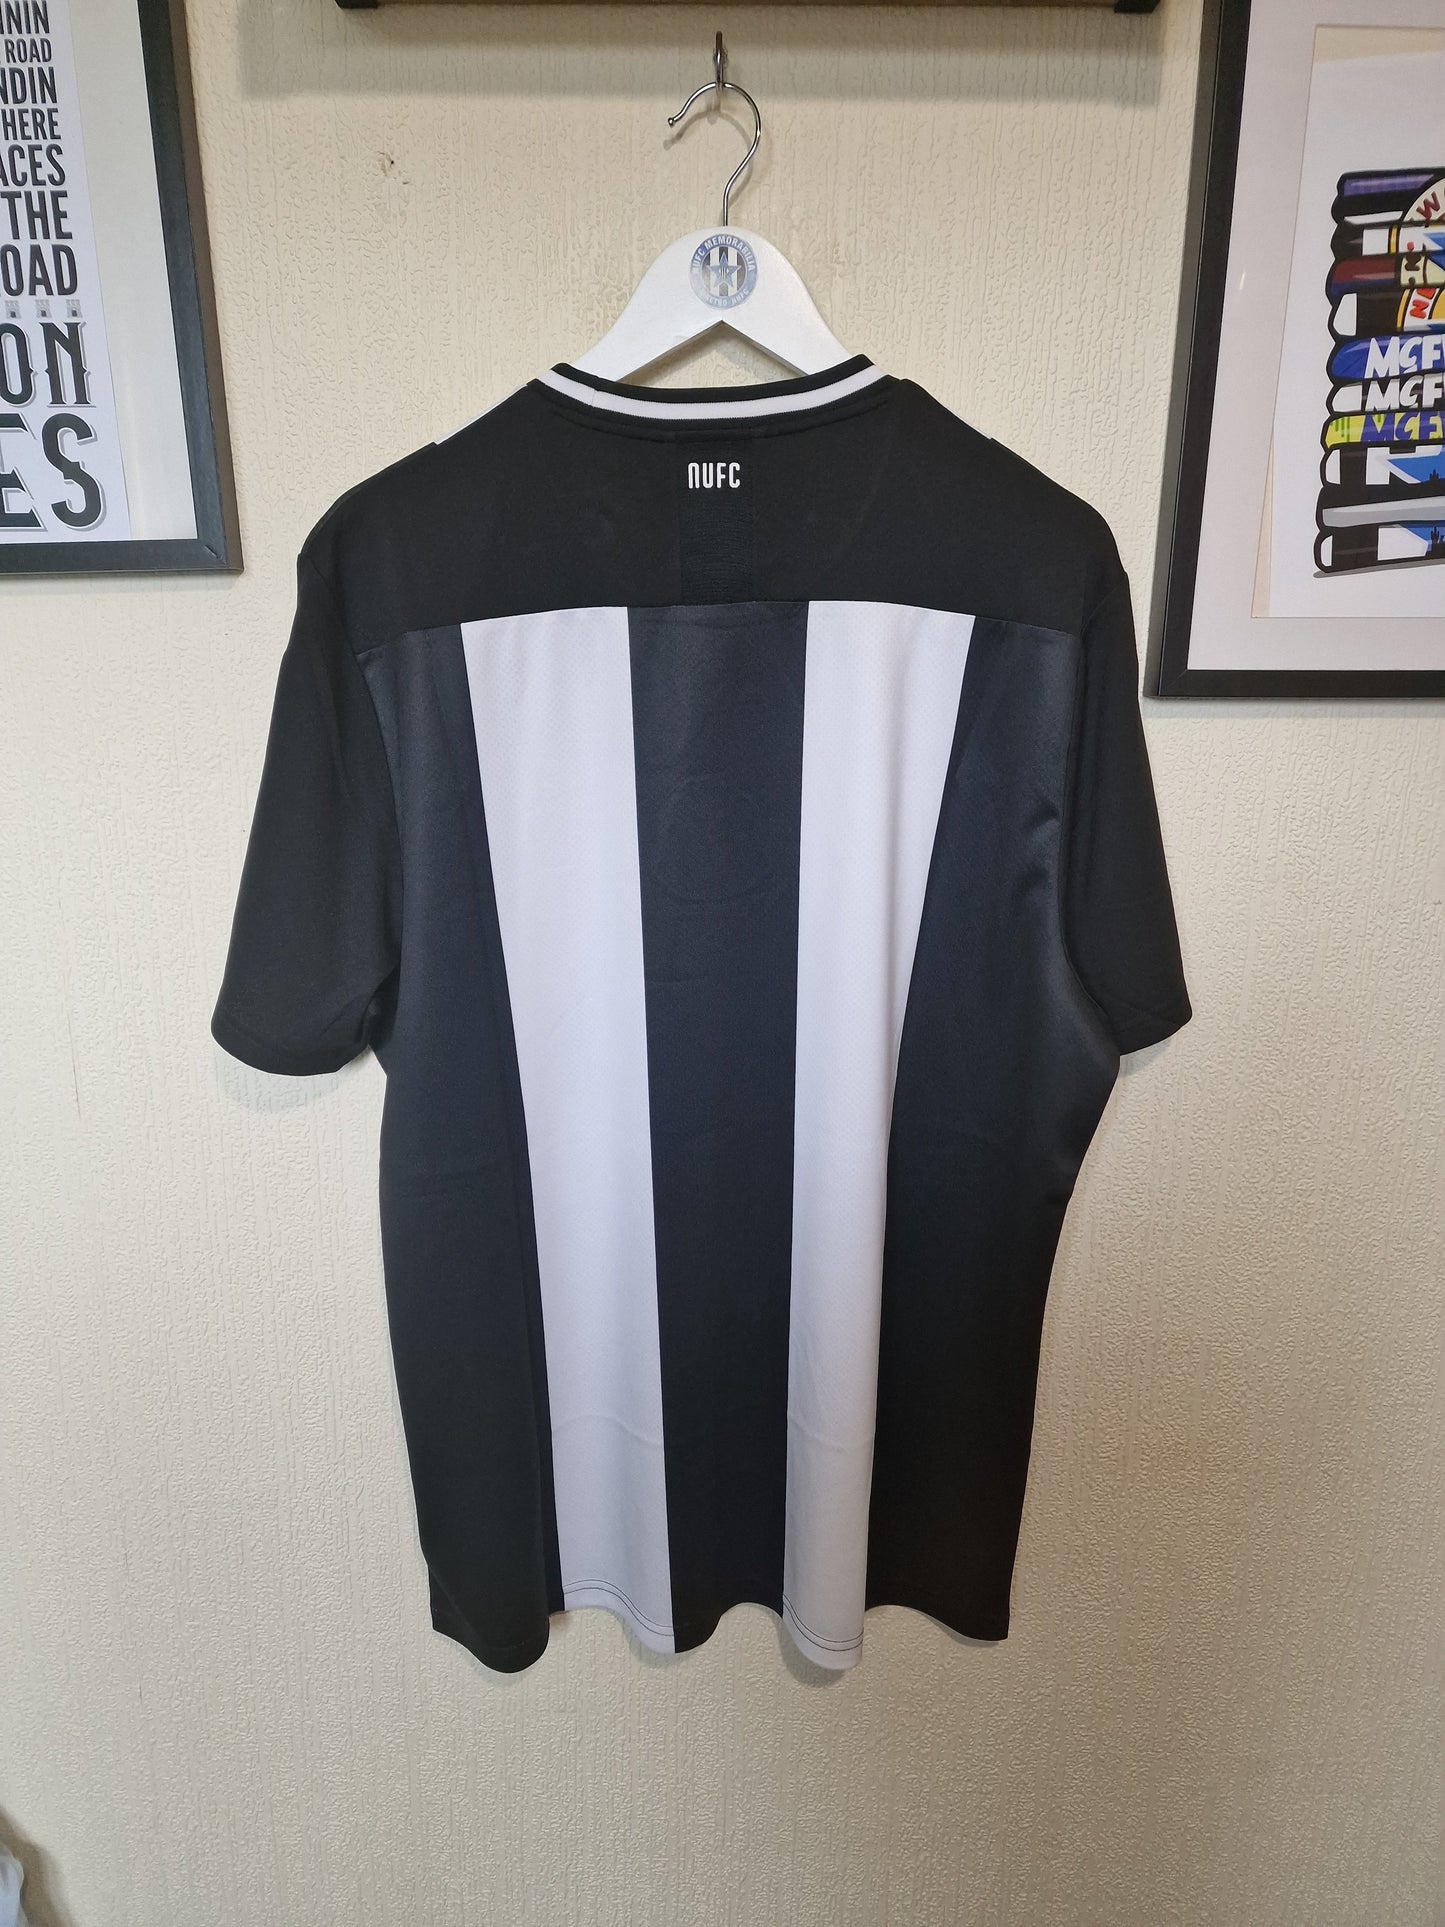 Newcastle United 2019/20 Home shirt BNWT - XL